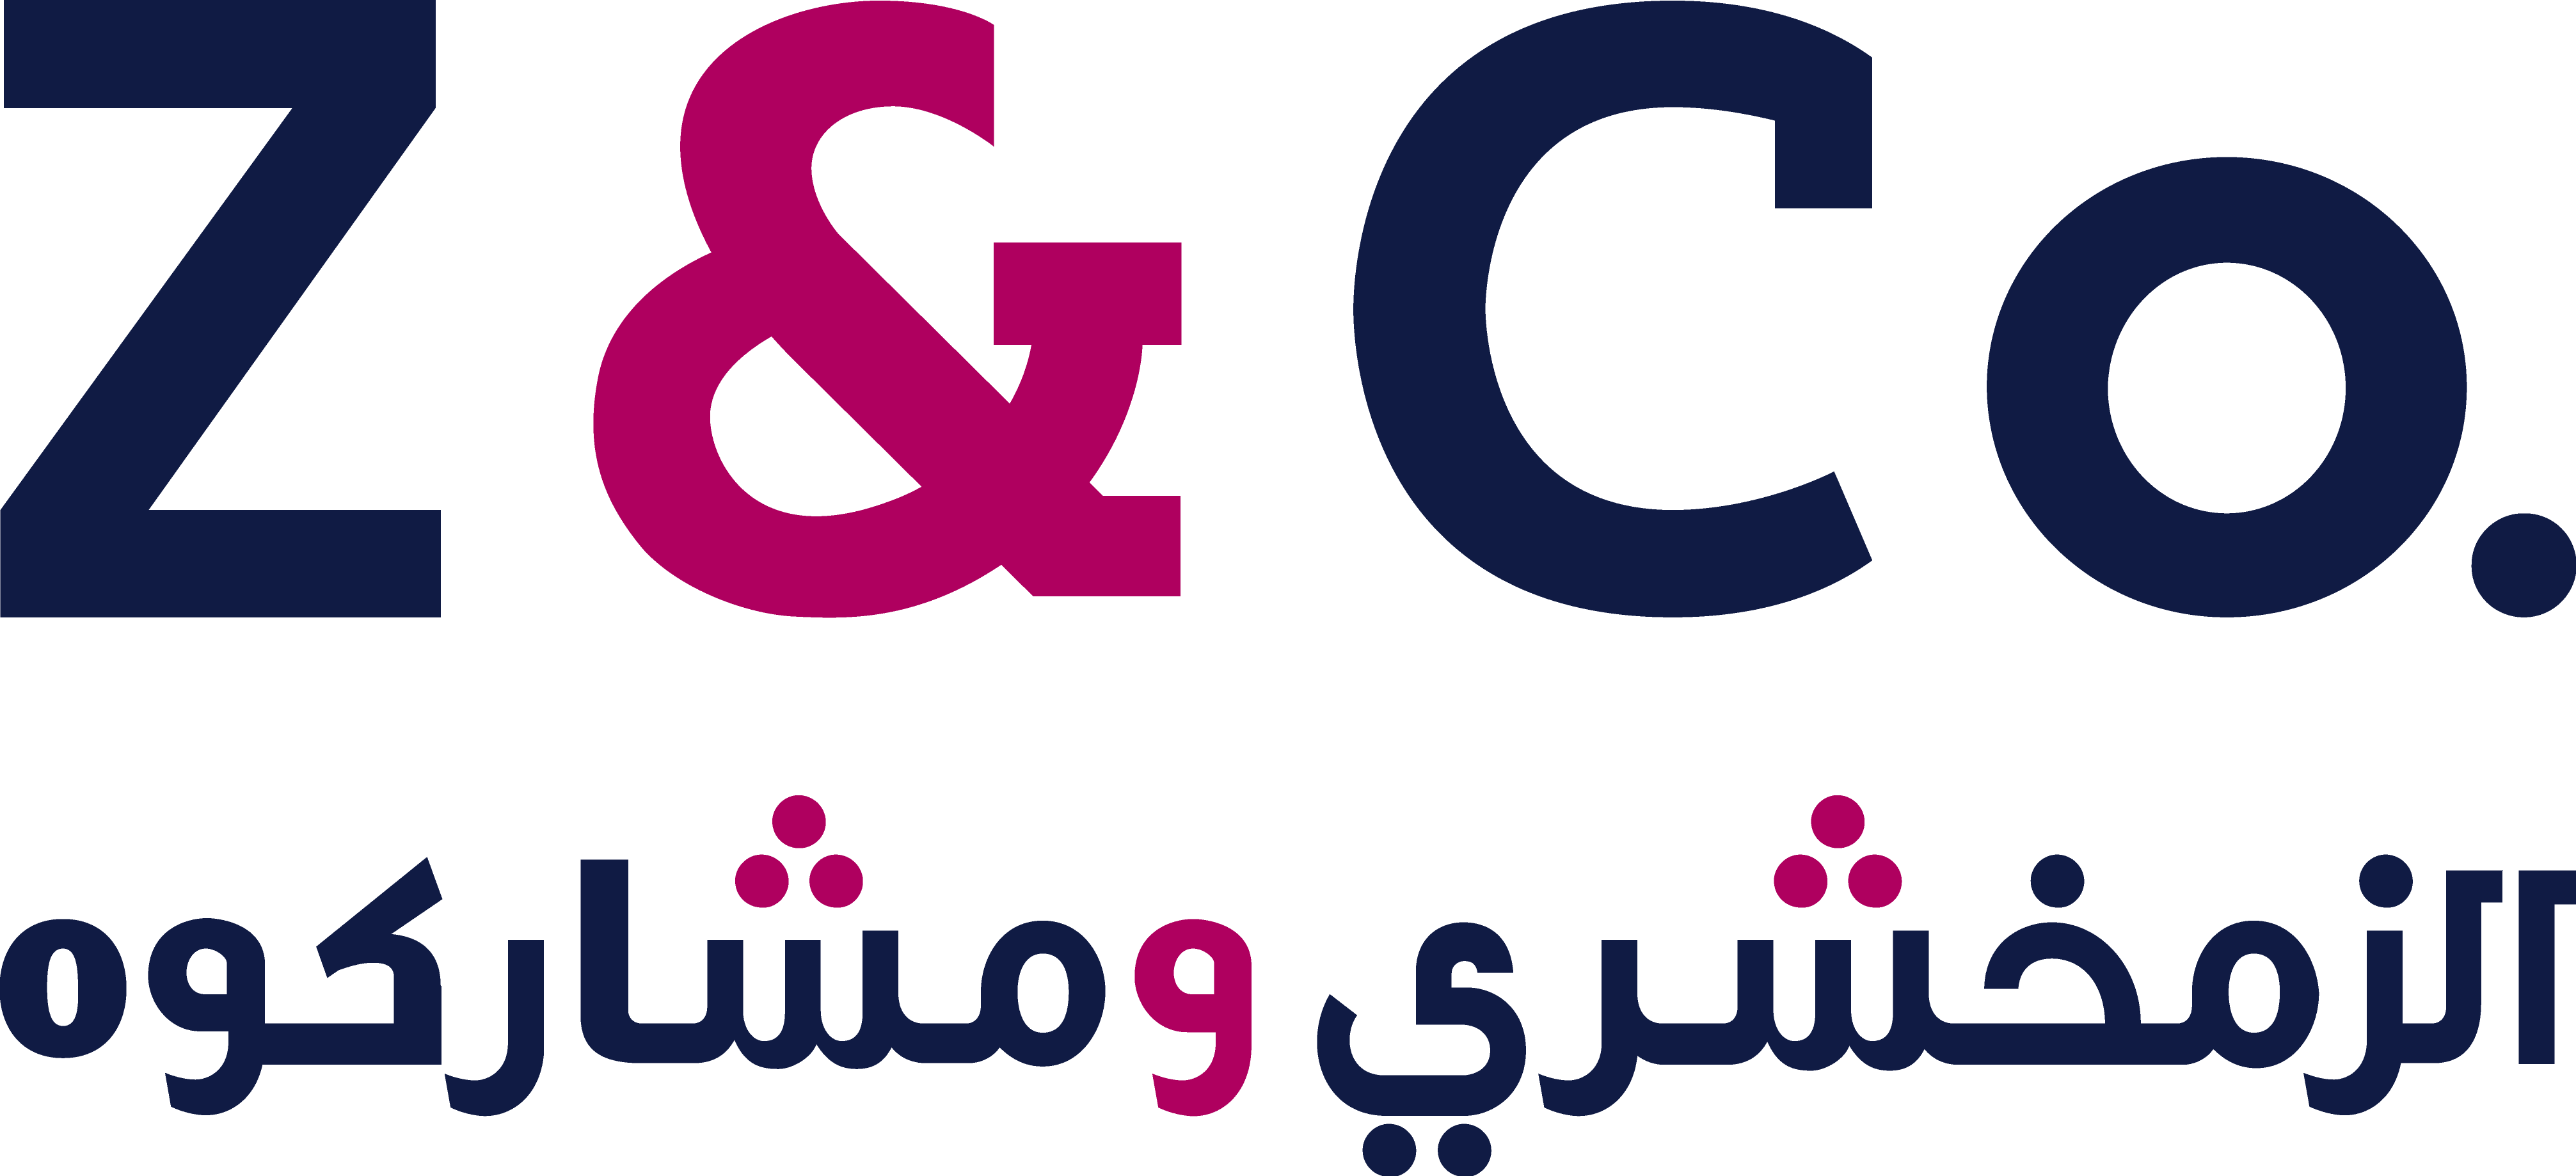 Z&Co logo